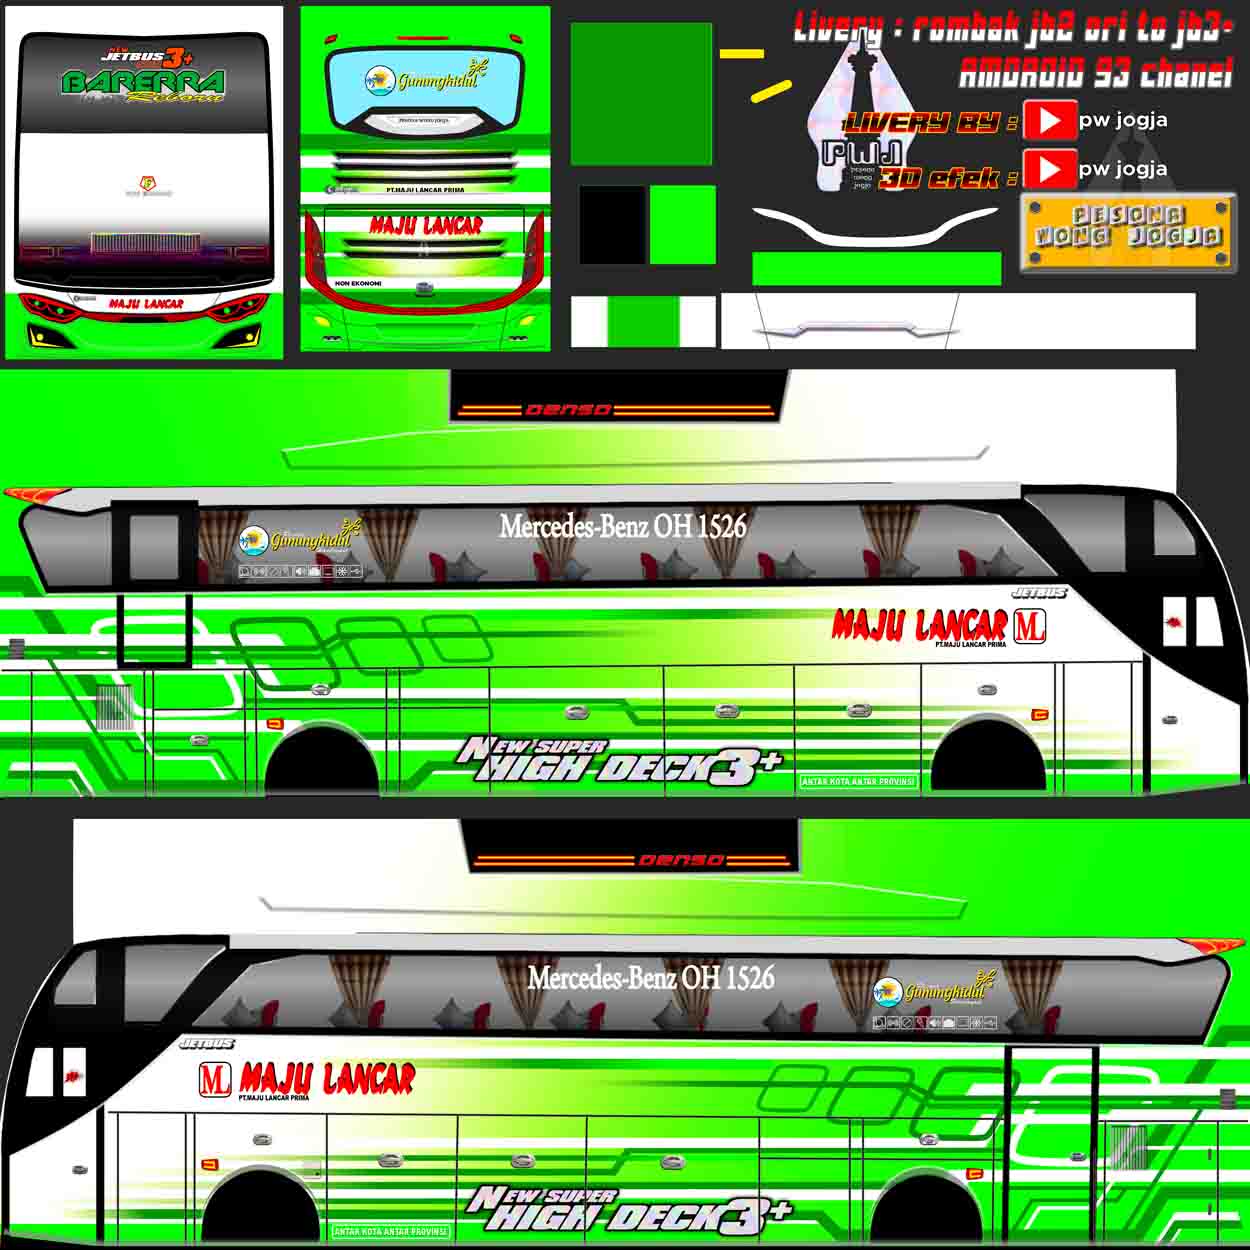 download livery bus maju lancar